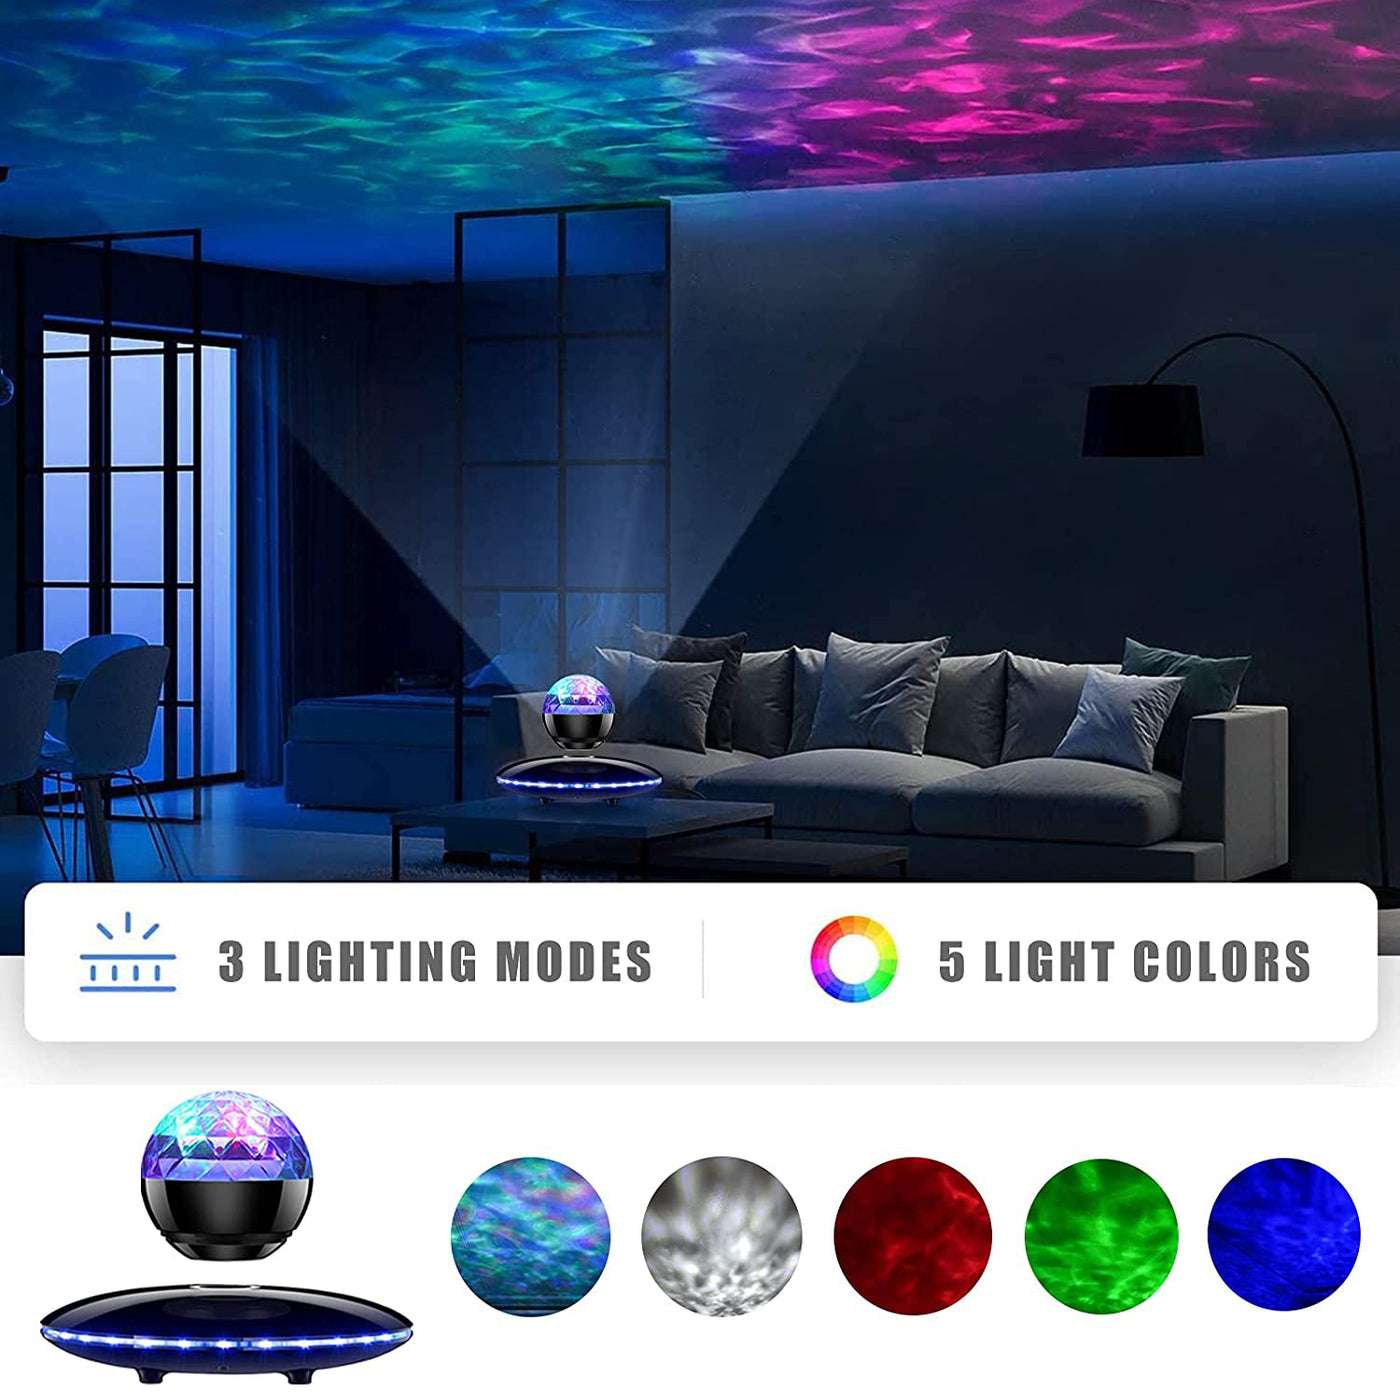 LANGTU Magnetic Levitating Party Neon Bluetooth Wireless Floating Speaker